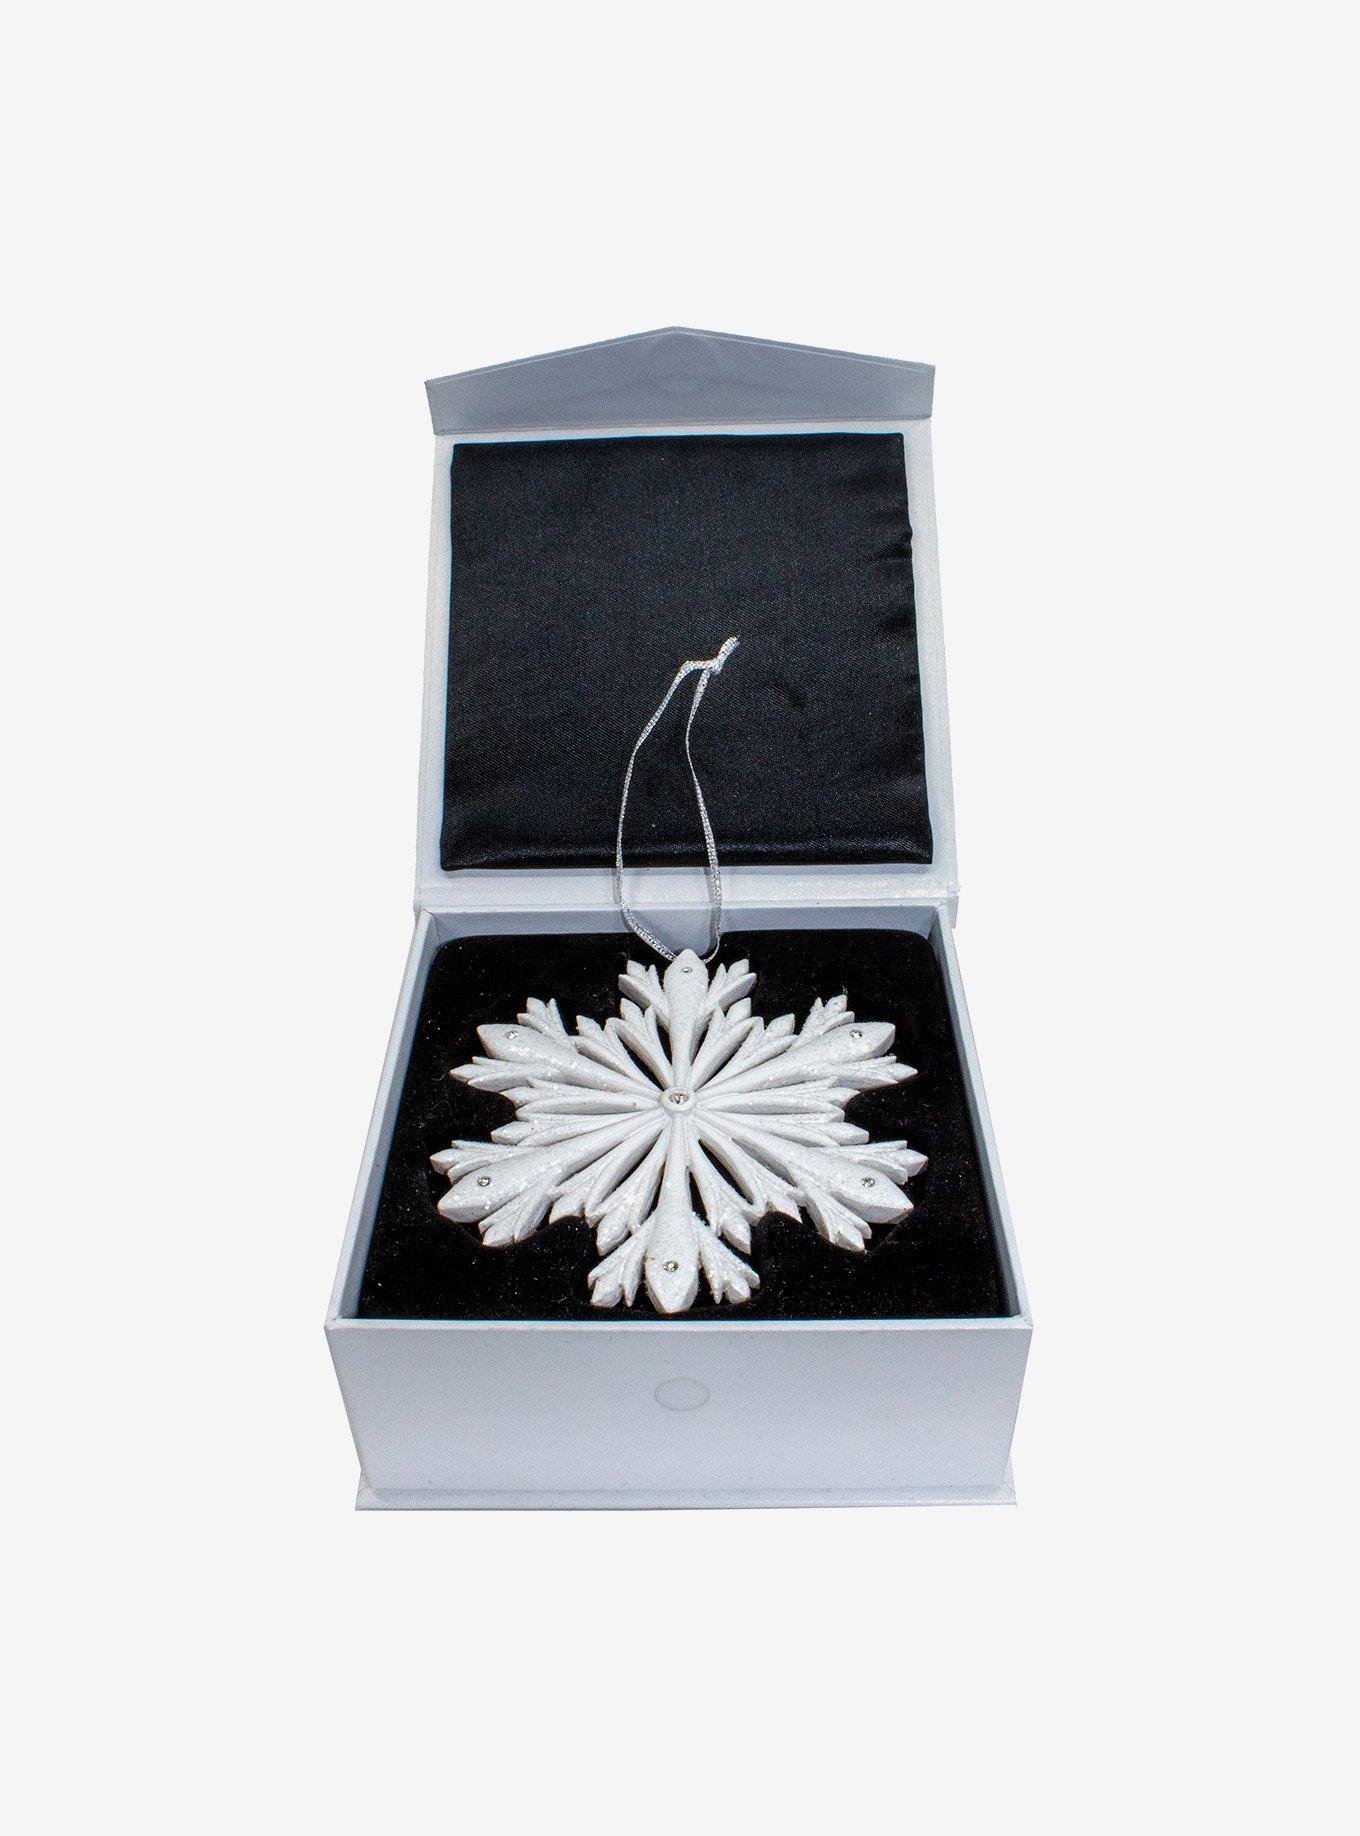 Kurt Adler Elegant Snowflake with Swarovski Elements Ornament